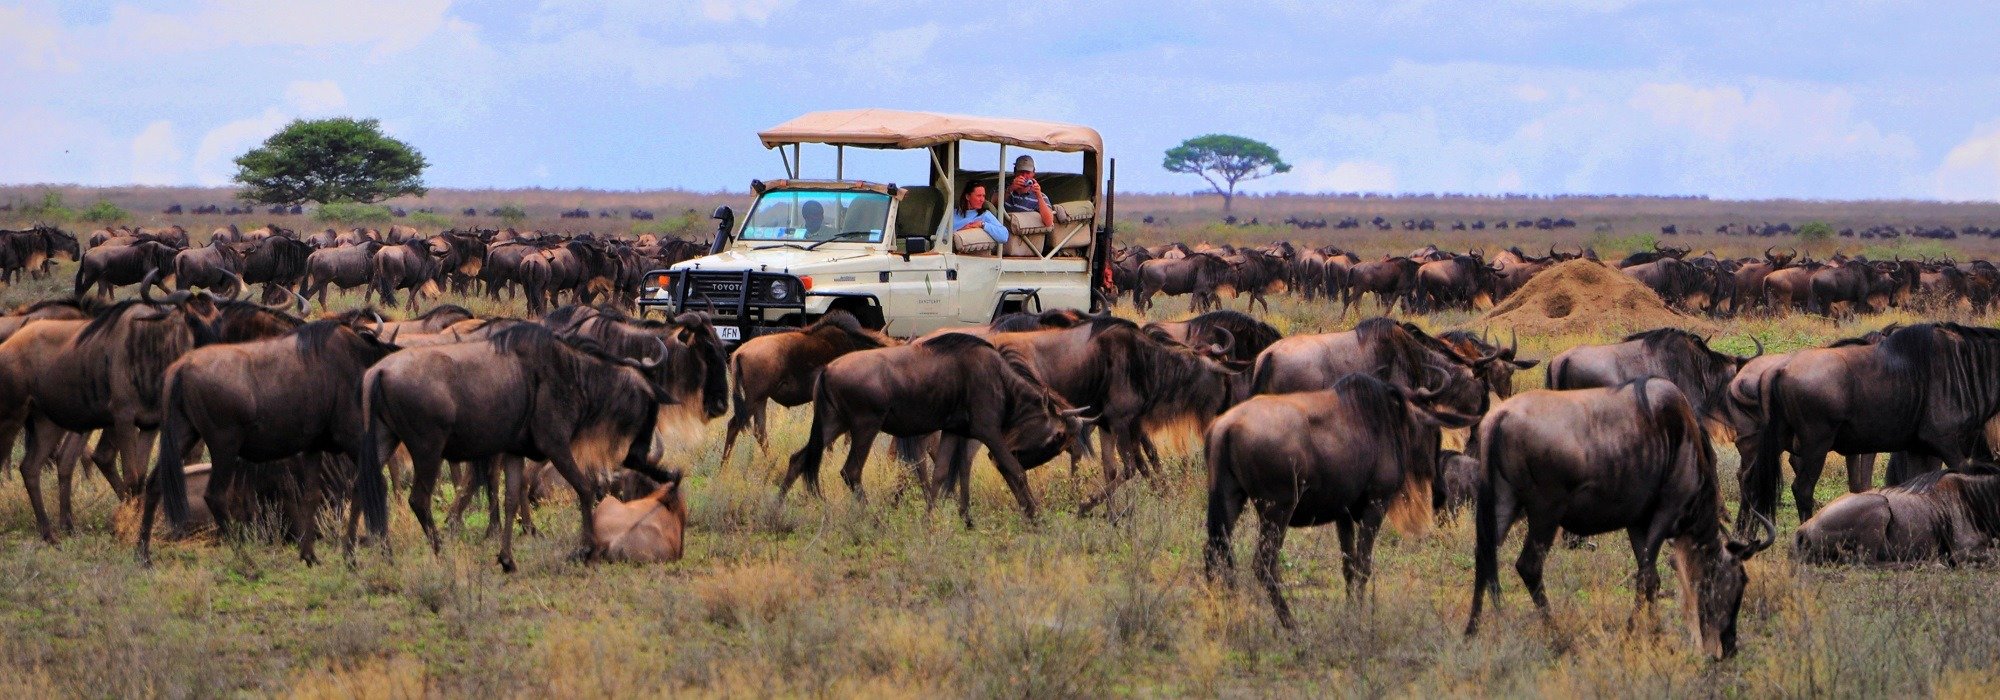 Tanzania Serengeti Migration